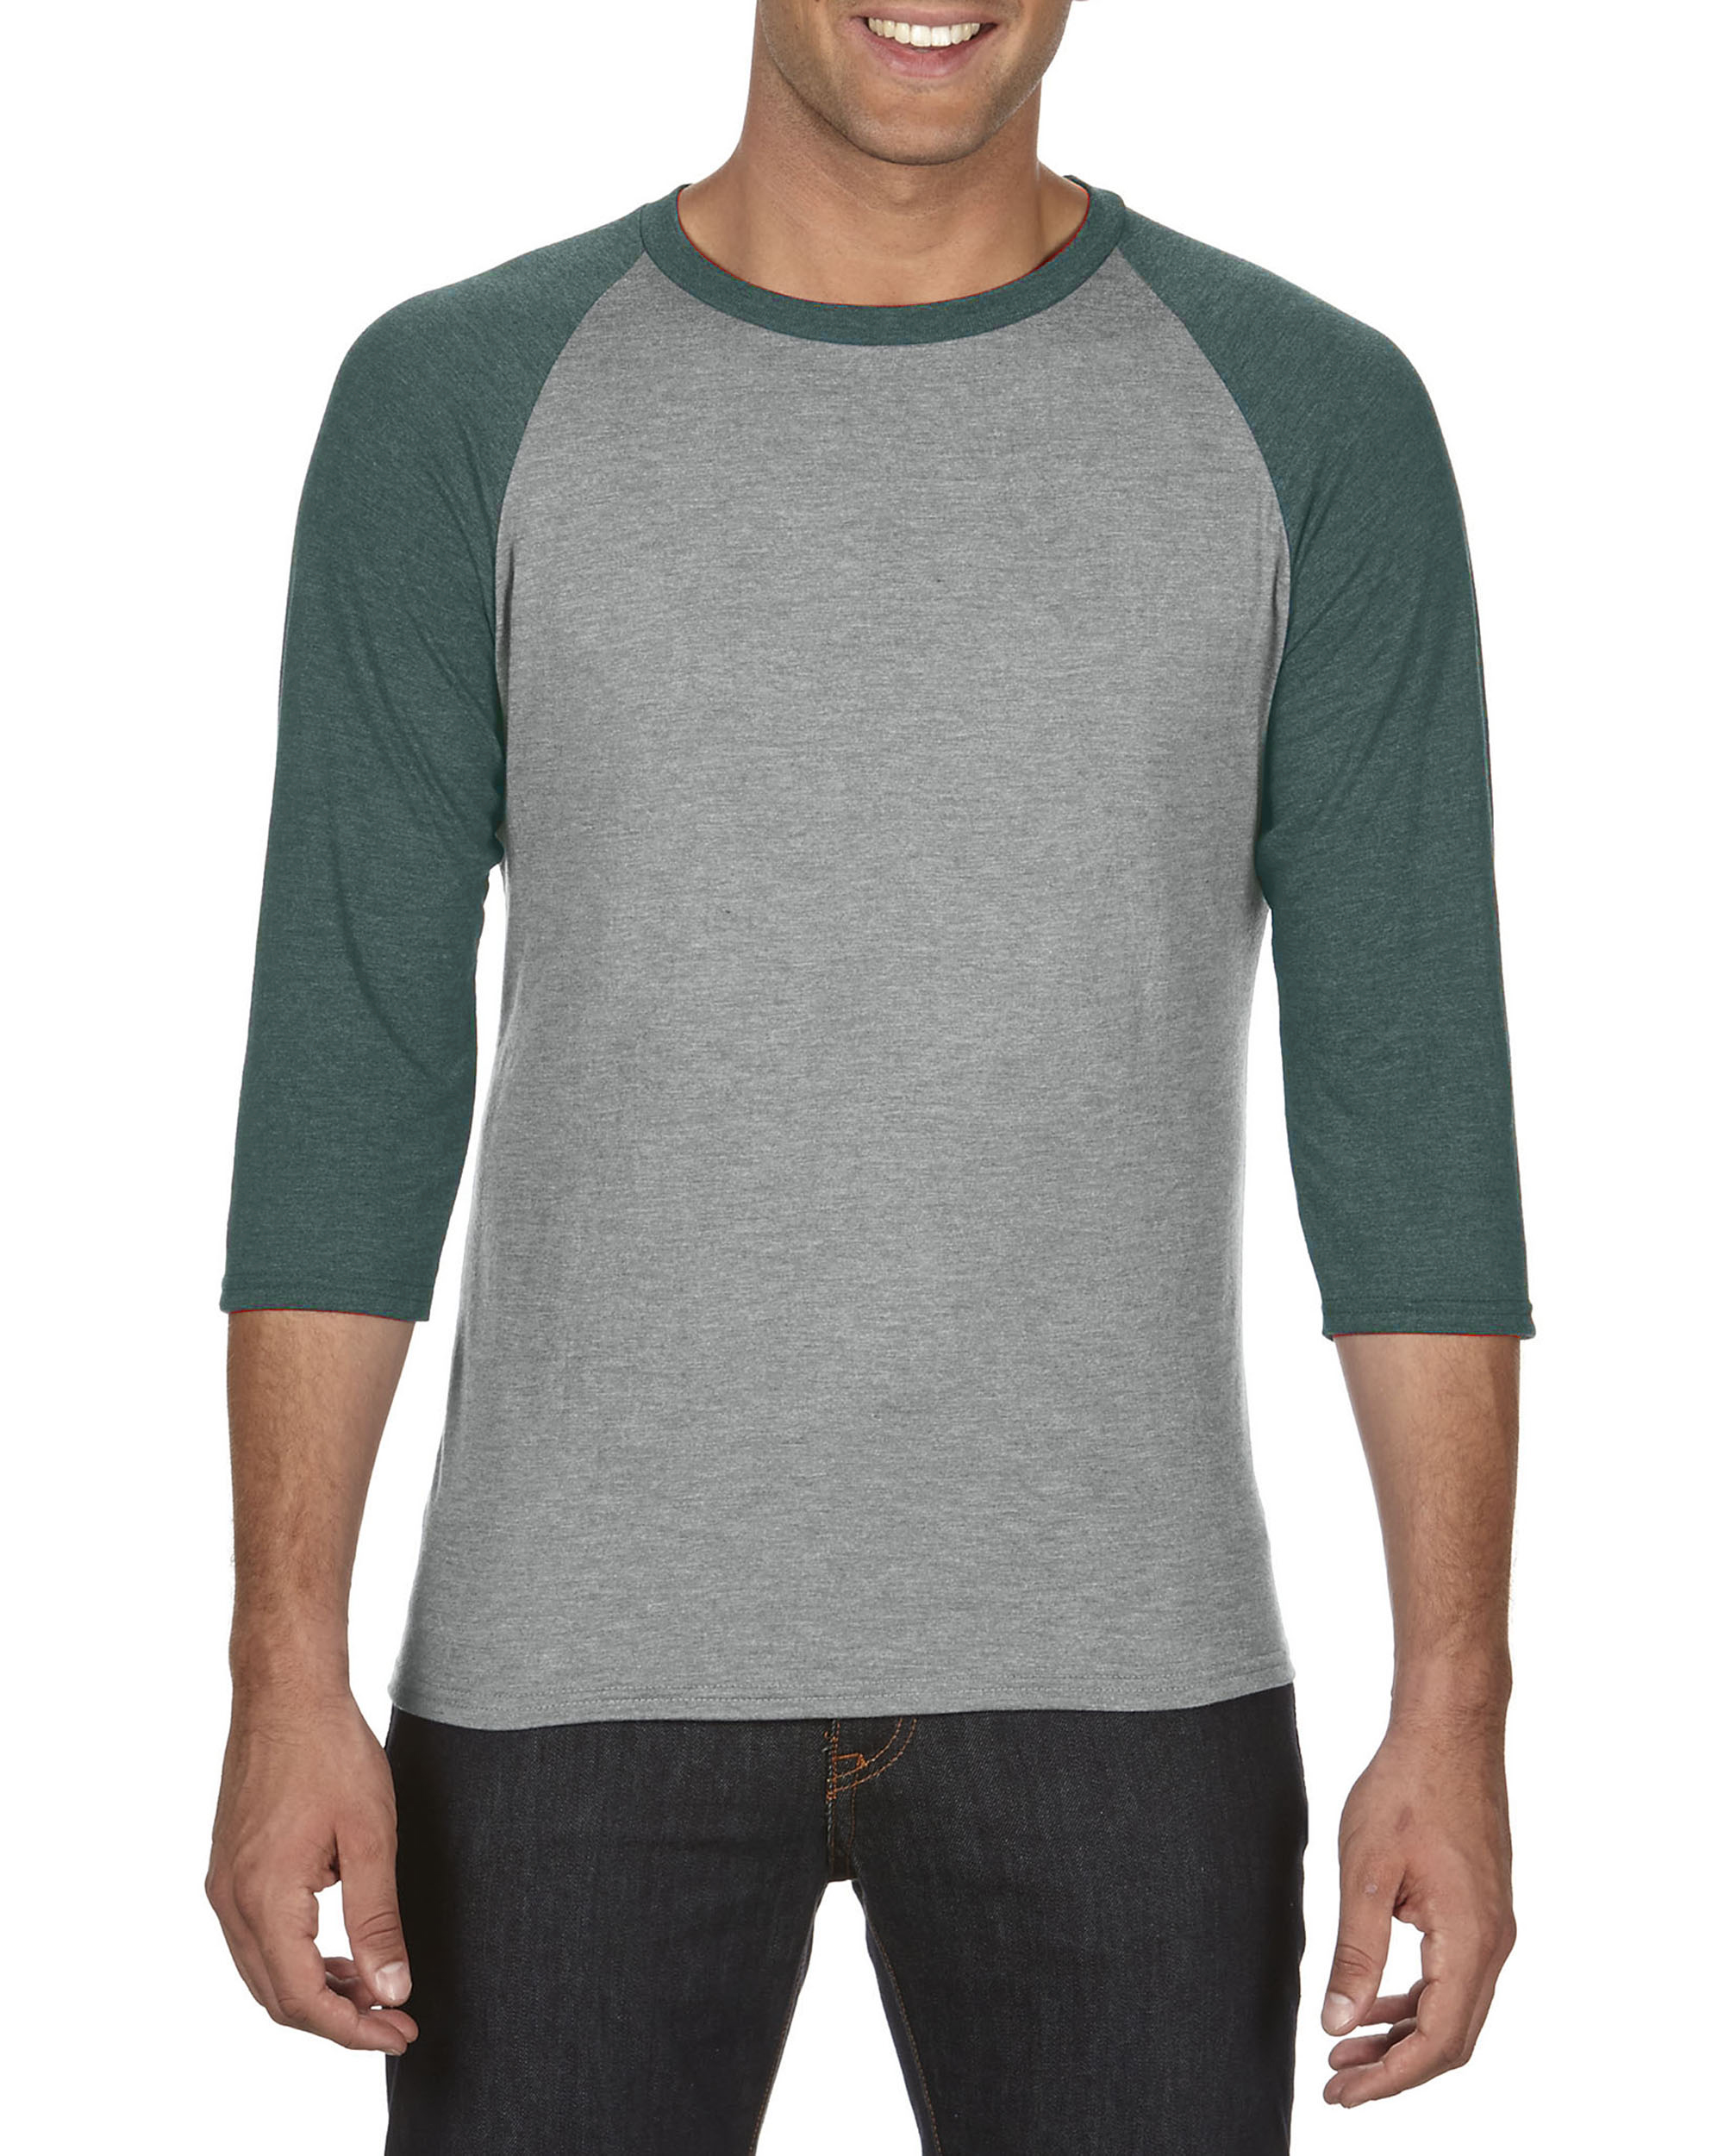 T-shirt Tri-Blend 3/4 Sleeve Raglan Tee ANVIL